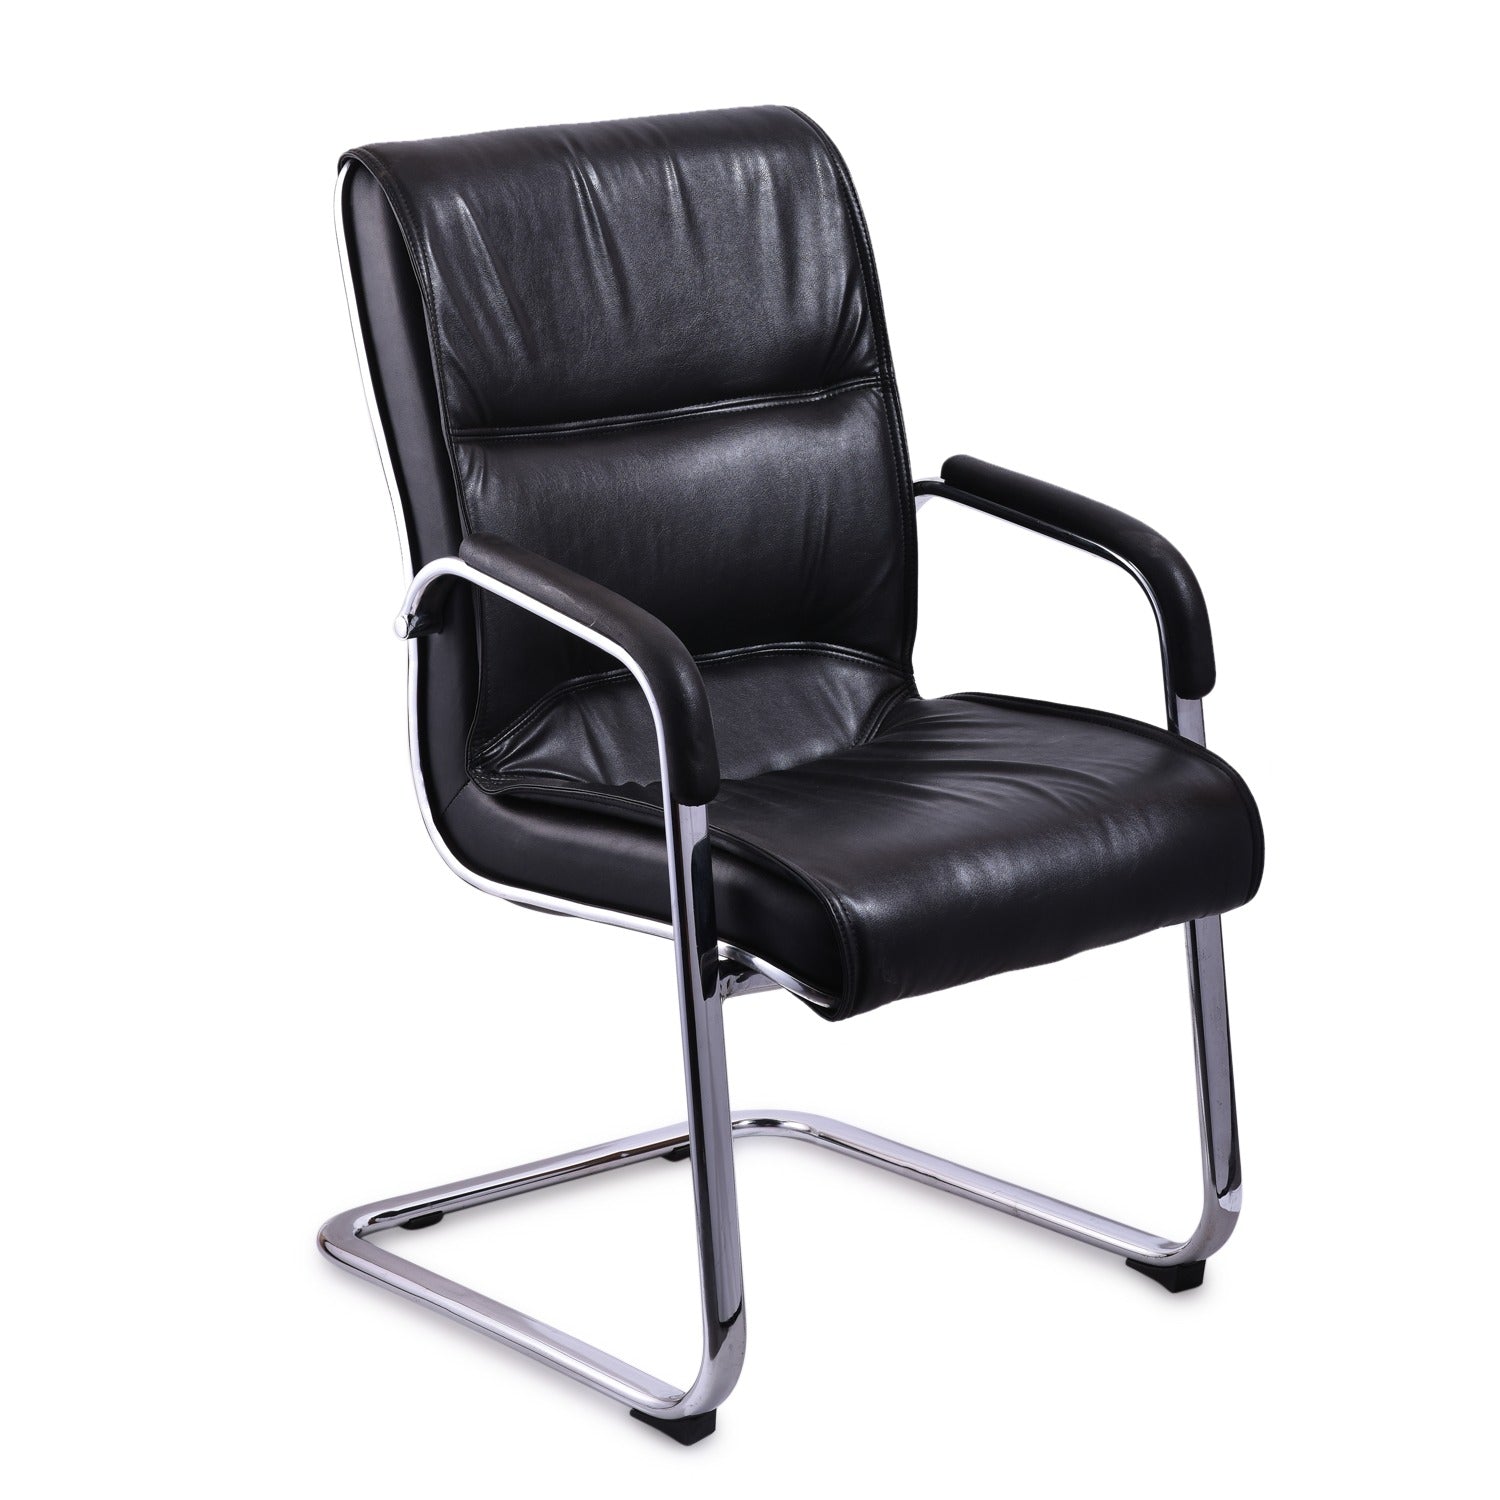 ZSV1061 Medium Back Chair by Zorin in Black Color Zorin